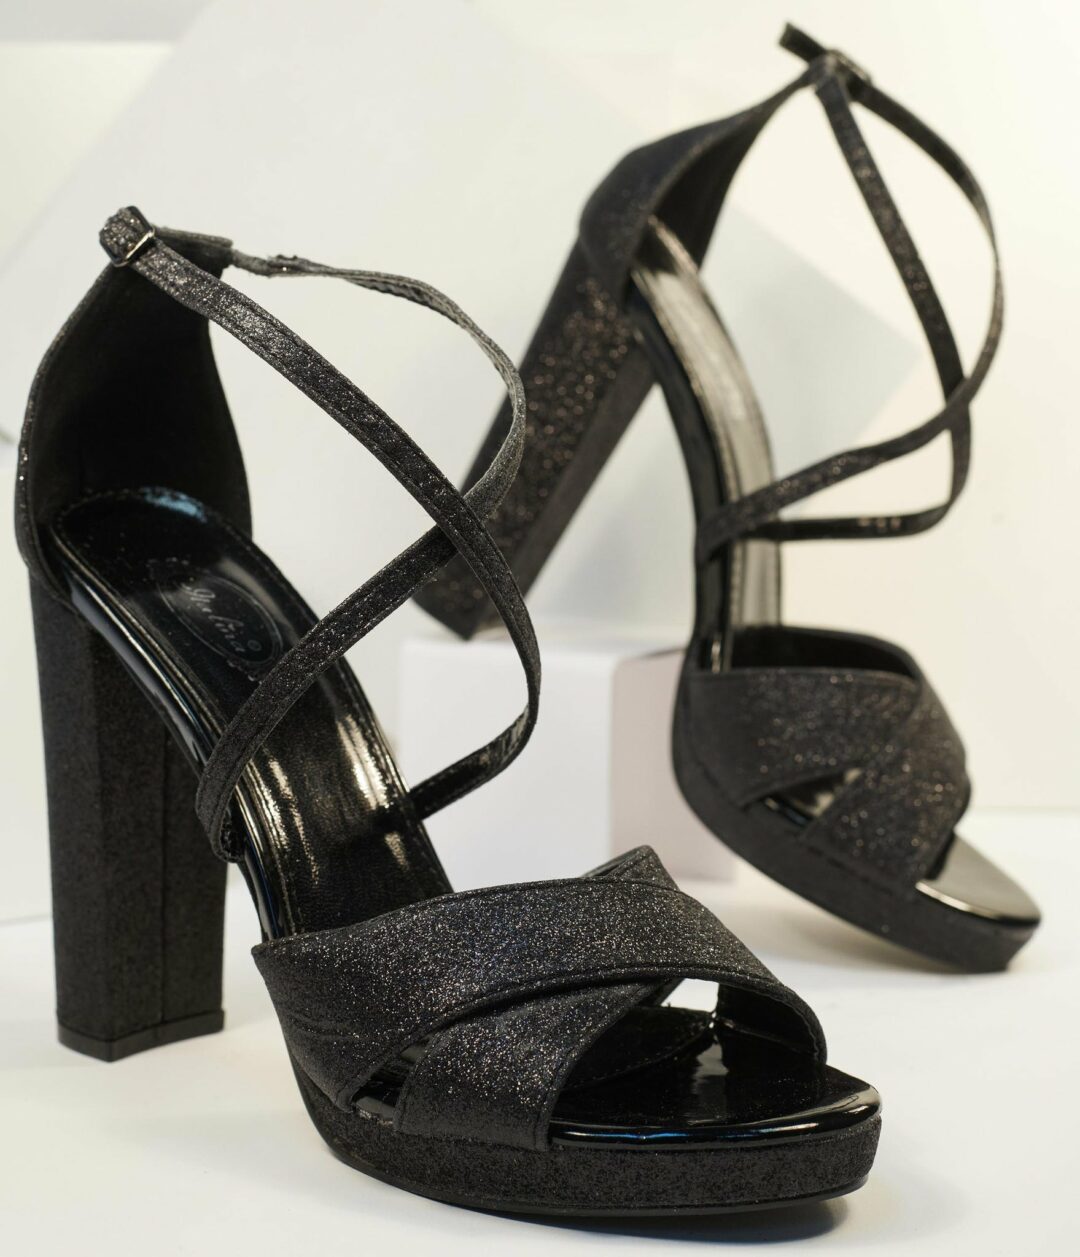 12 pairs of darkly romantic black wedding shoes